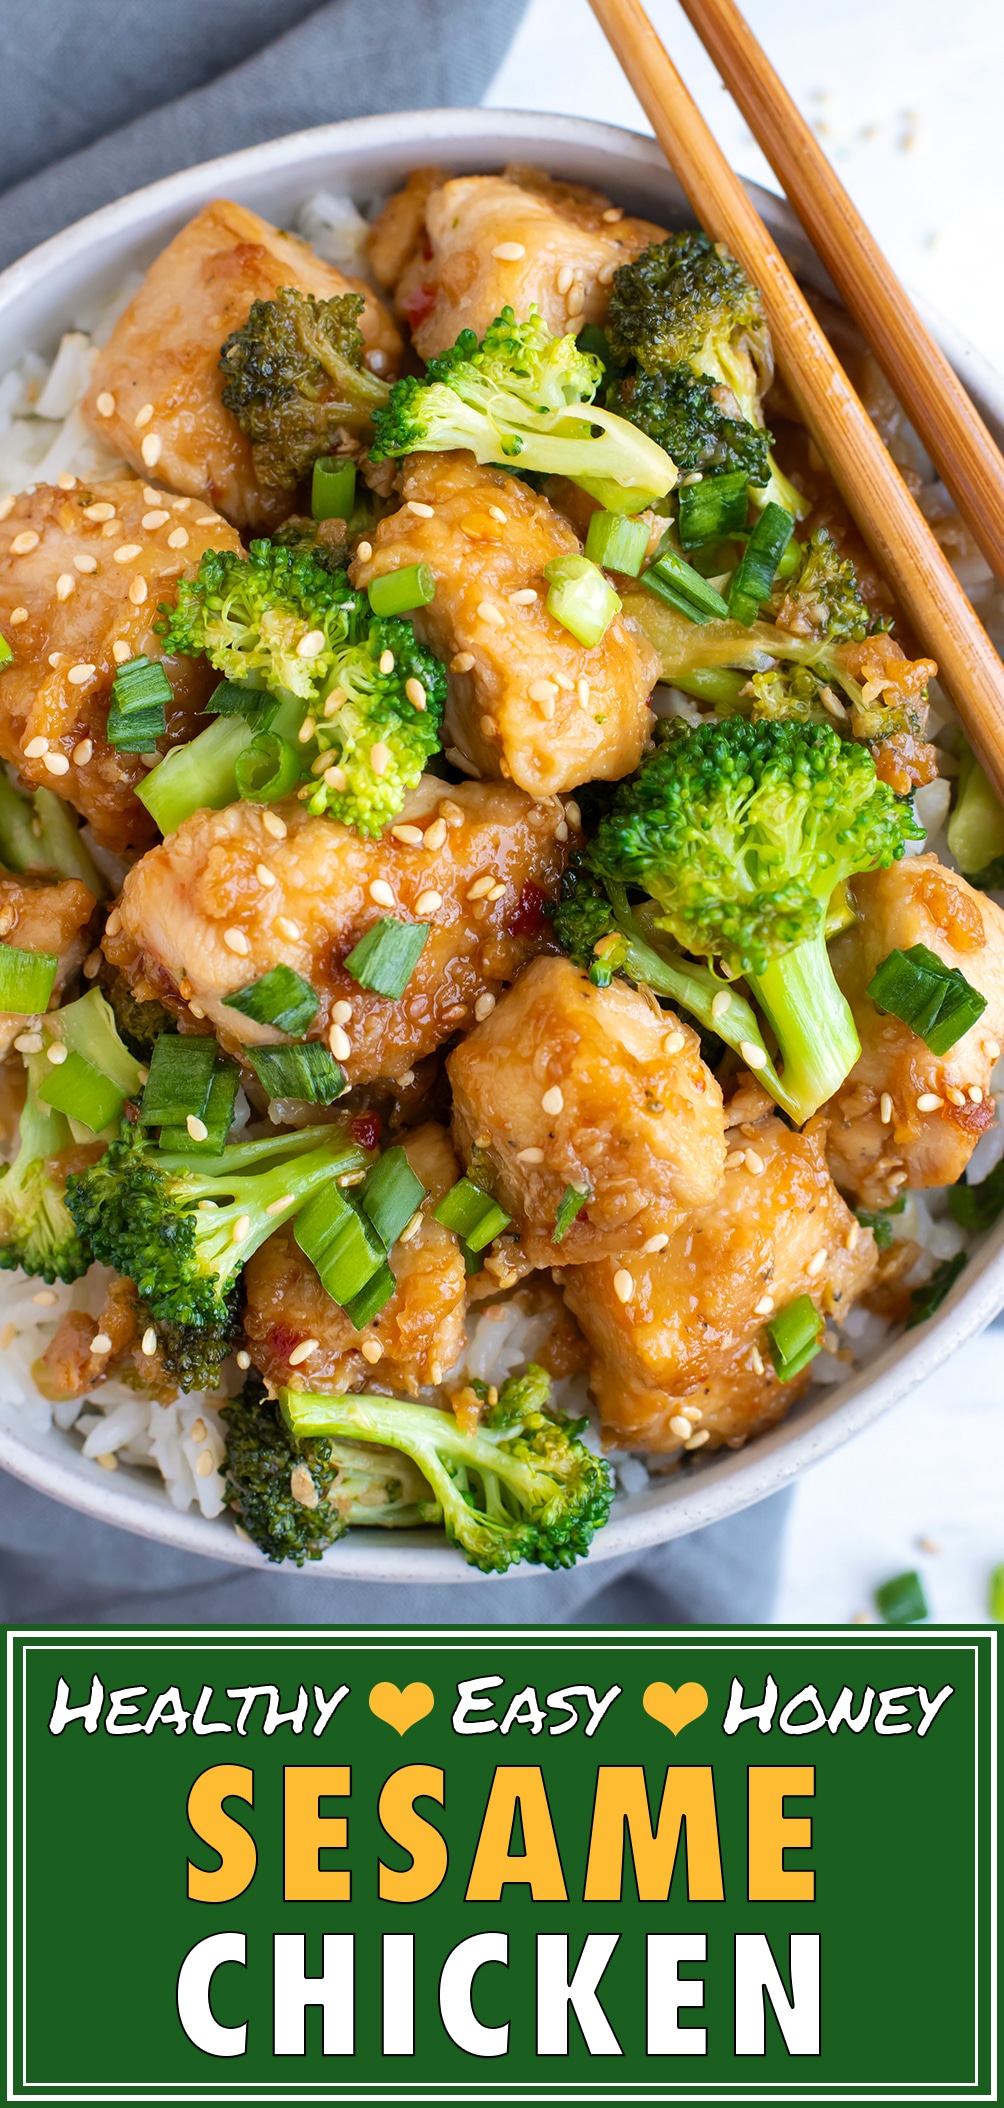 Honey Sesame Chicken and Broccoli Stir-Fry - Evolving Table